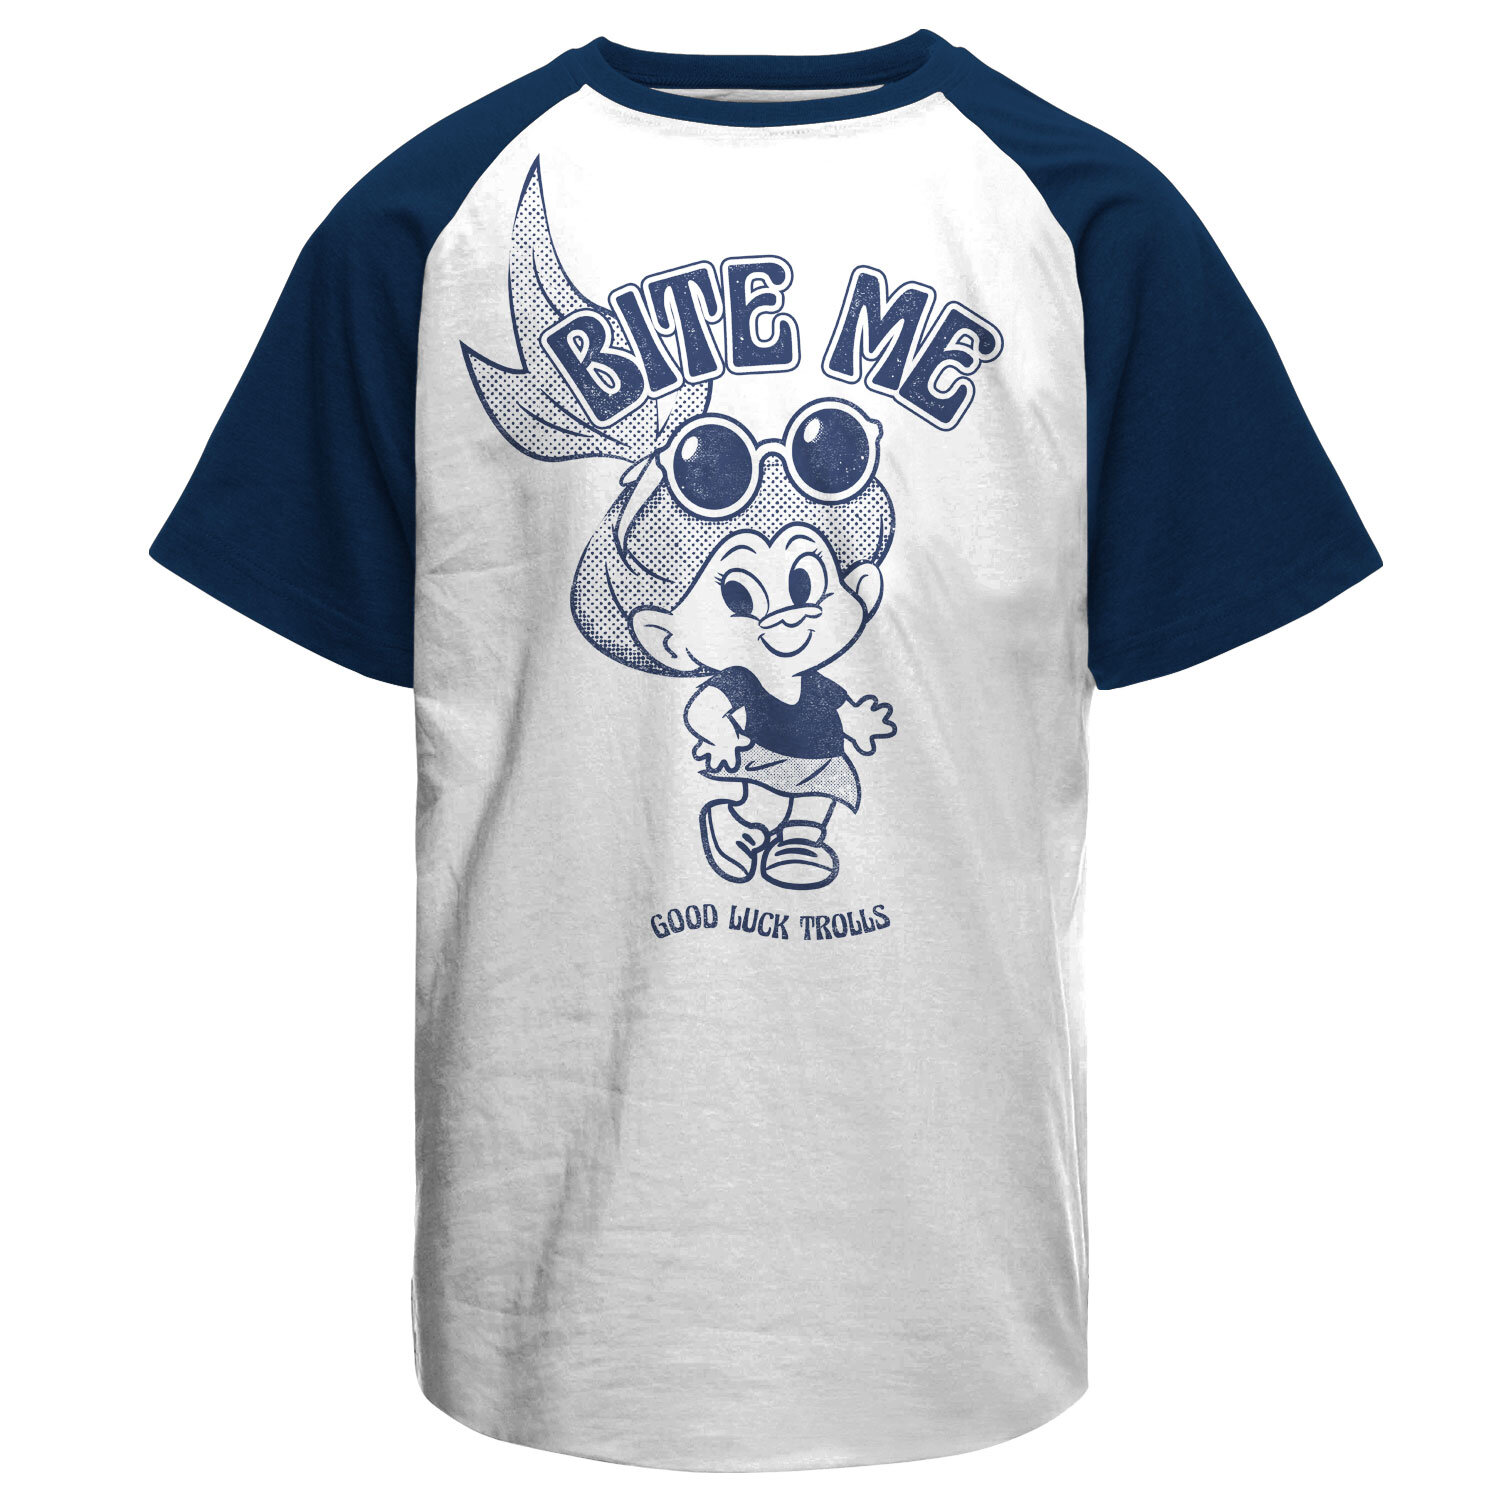 Good Luck Trolls - Bite Me Baseball T-Shirt